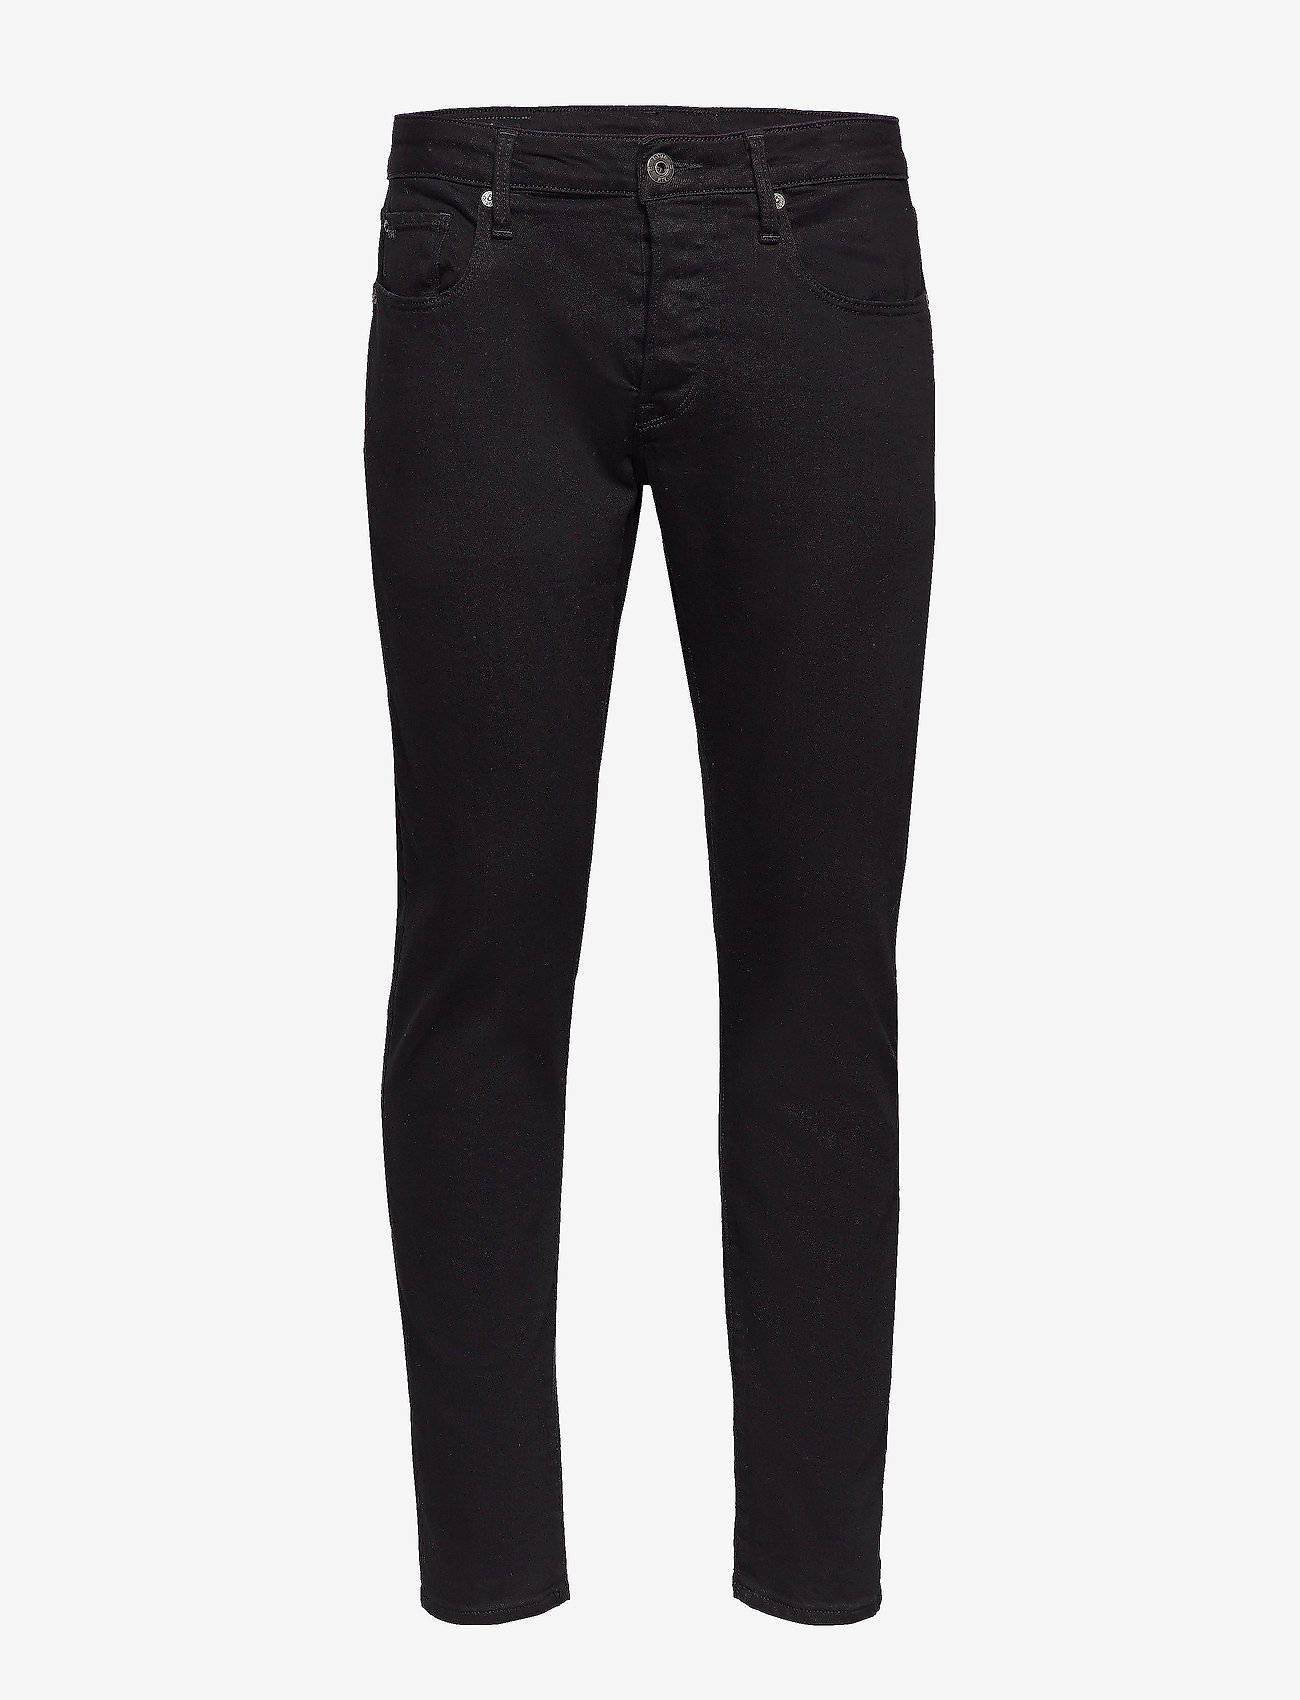 G-Star RAW - 3301 Slim - slim fit jeans - pitch black - 1